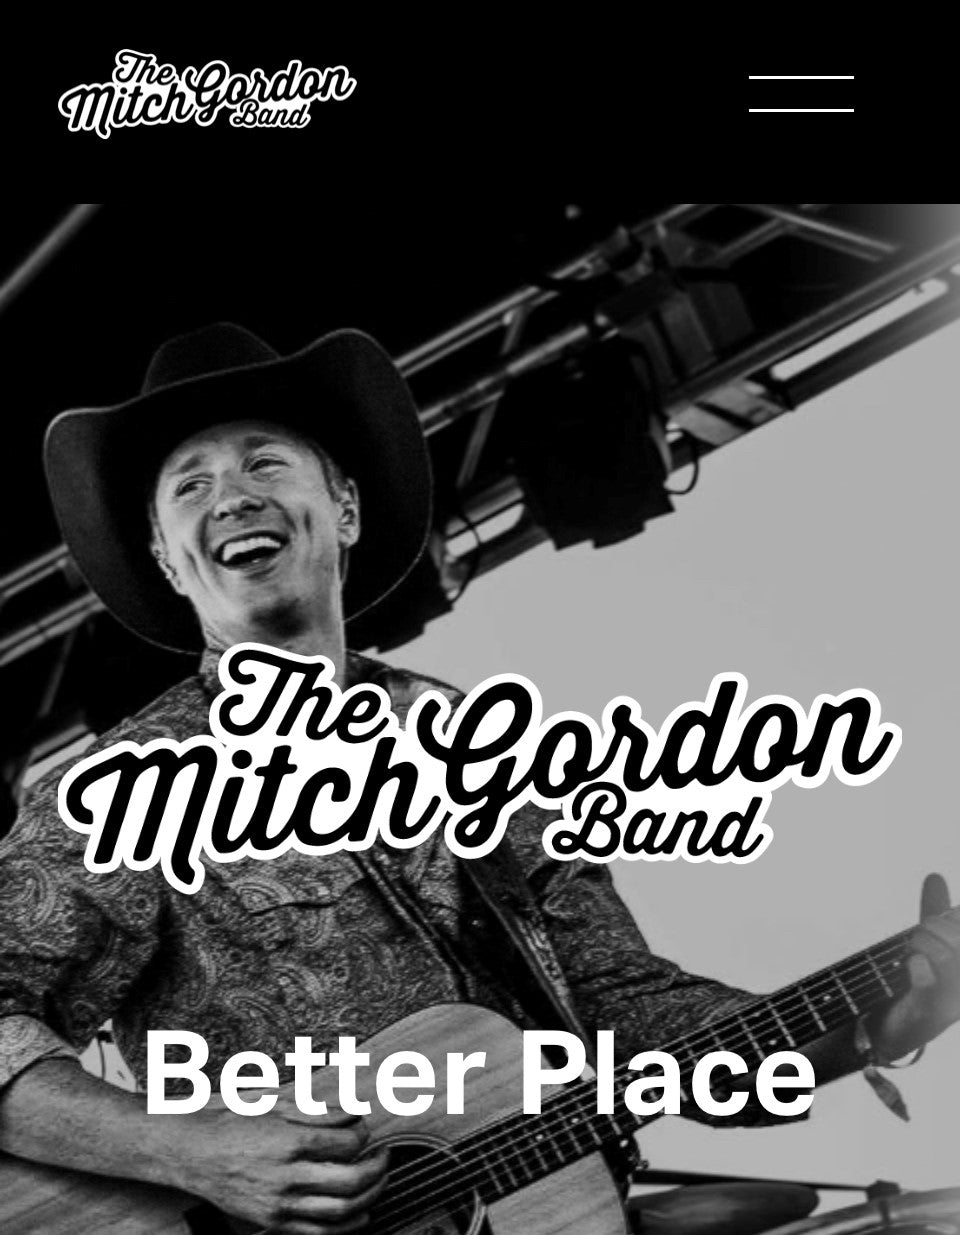 Mitch Gordon Band!